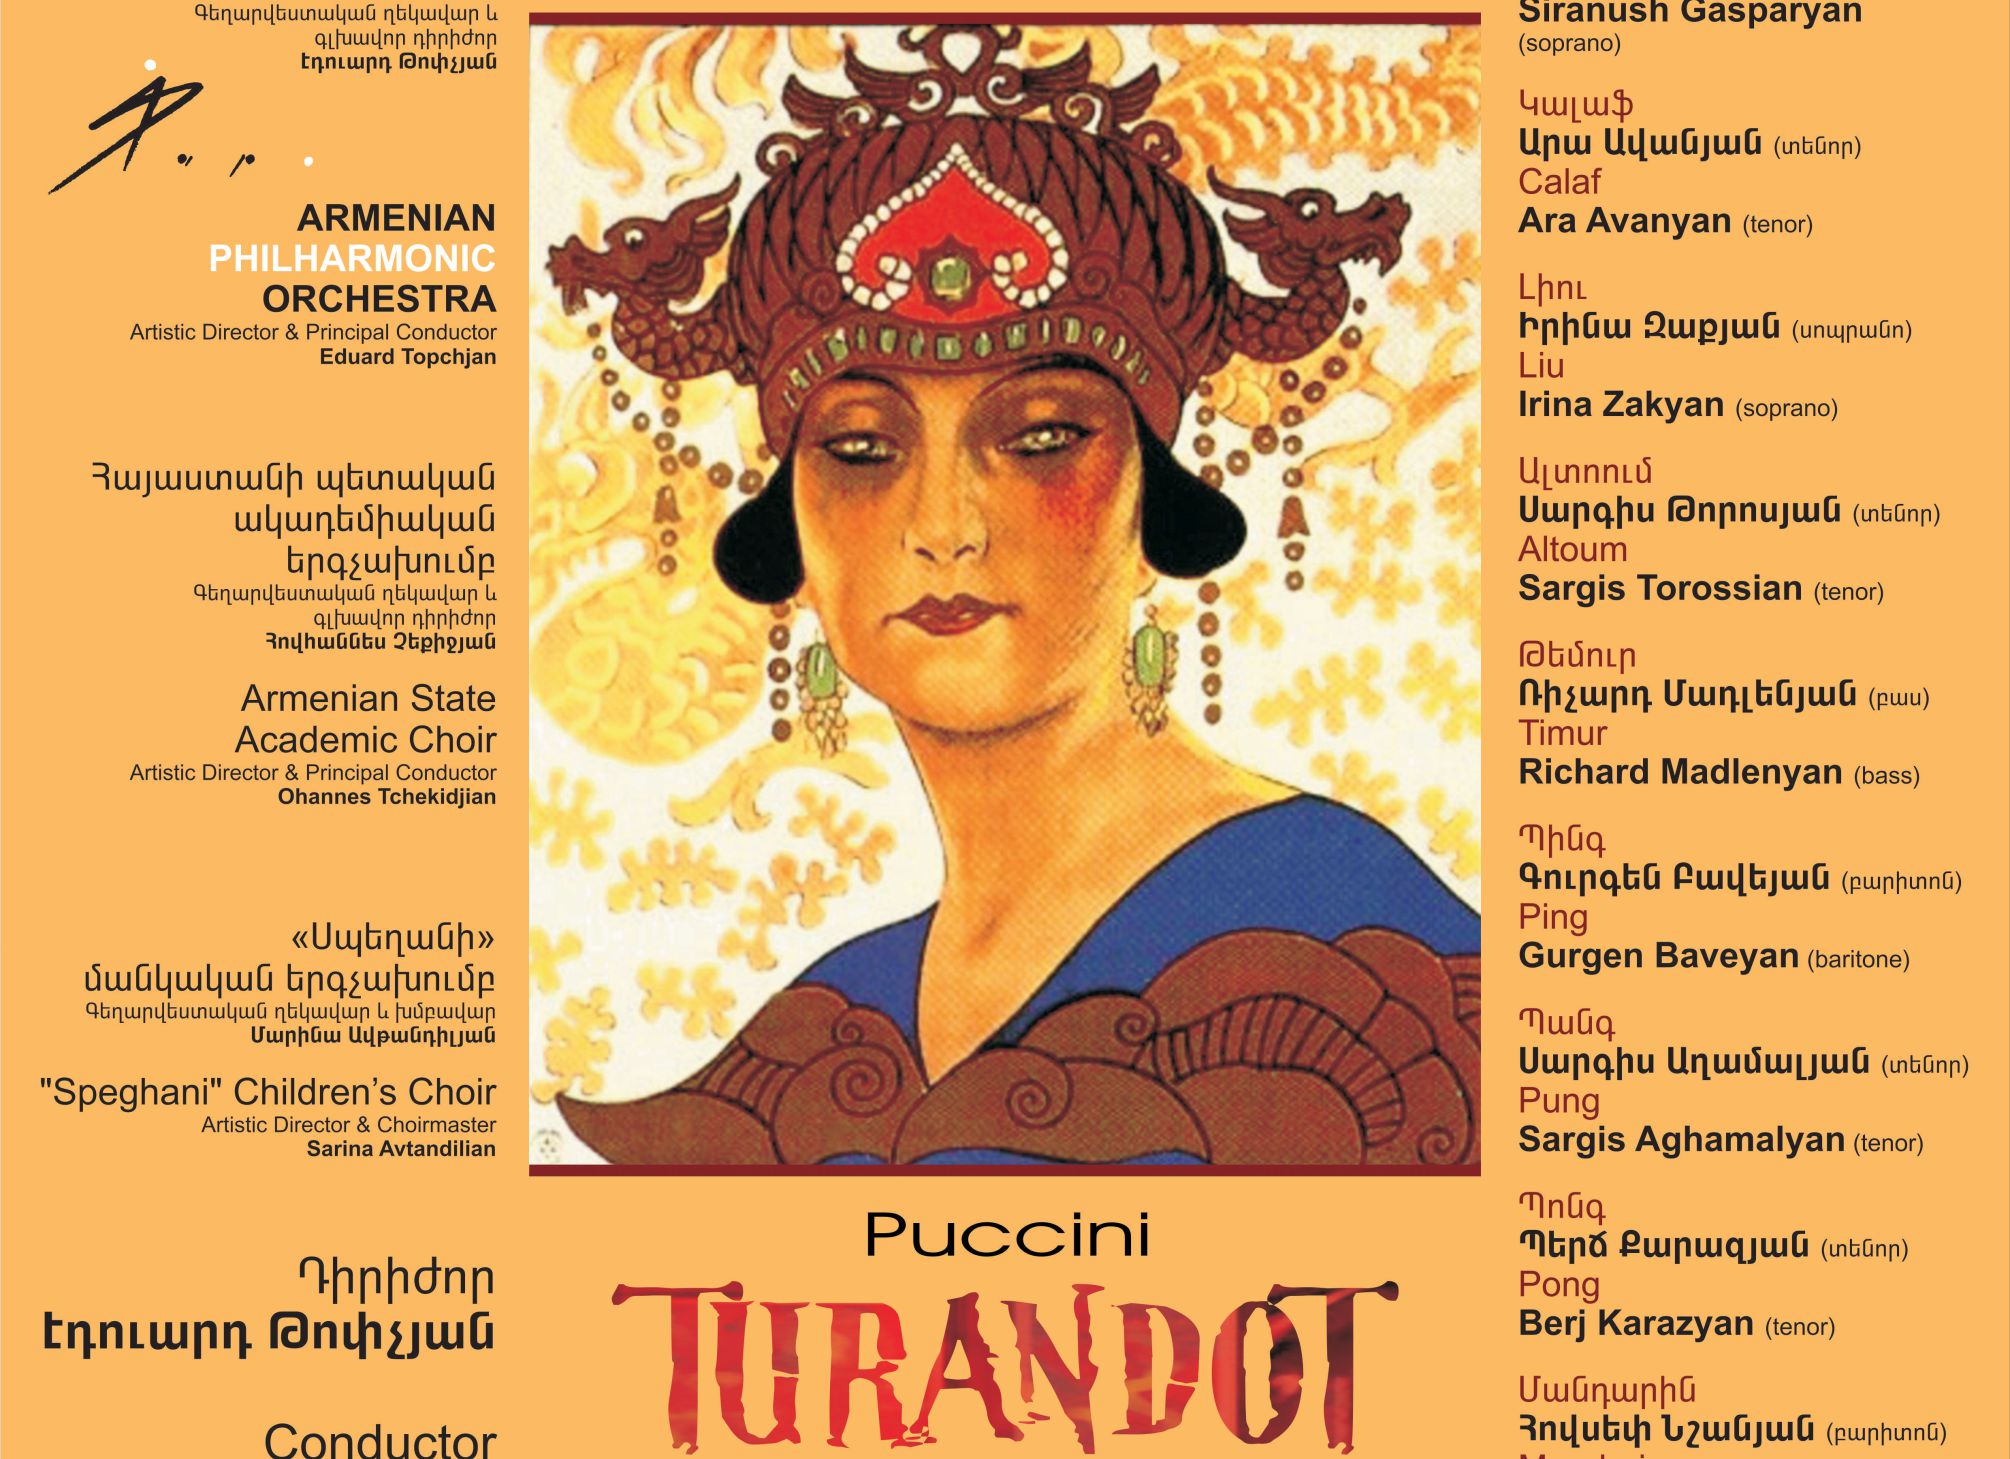 Giacomo “Turandot” – Armenian National Philharmonic Orchestra